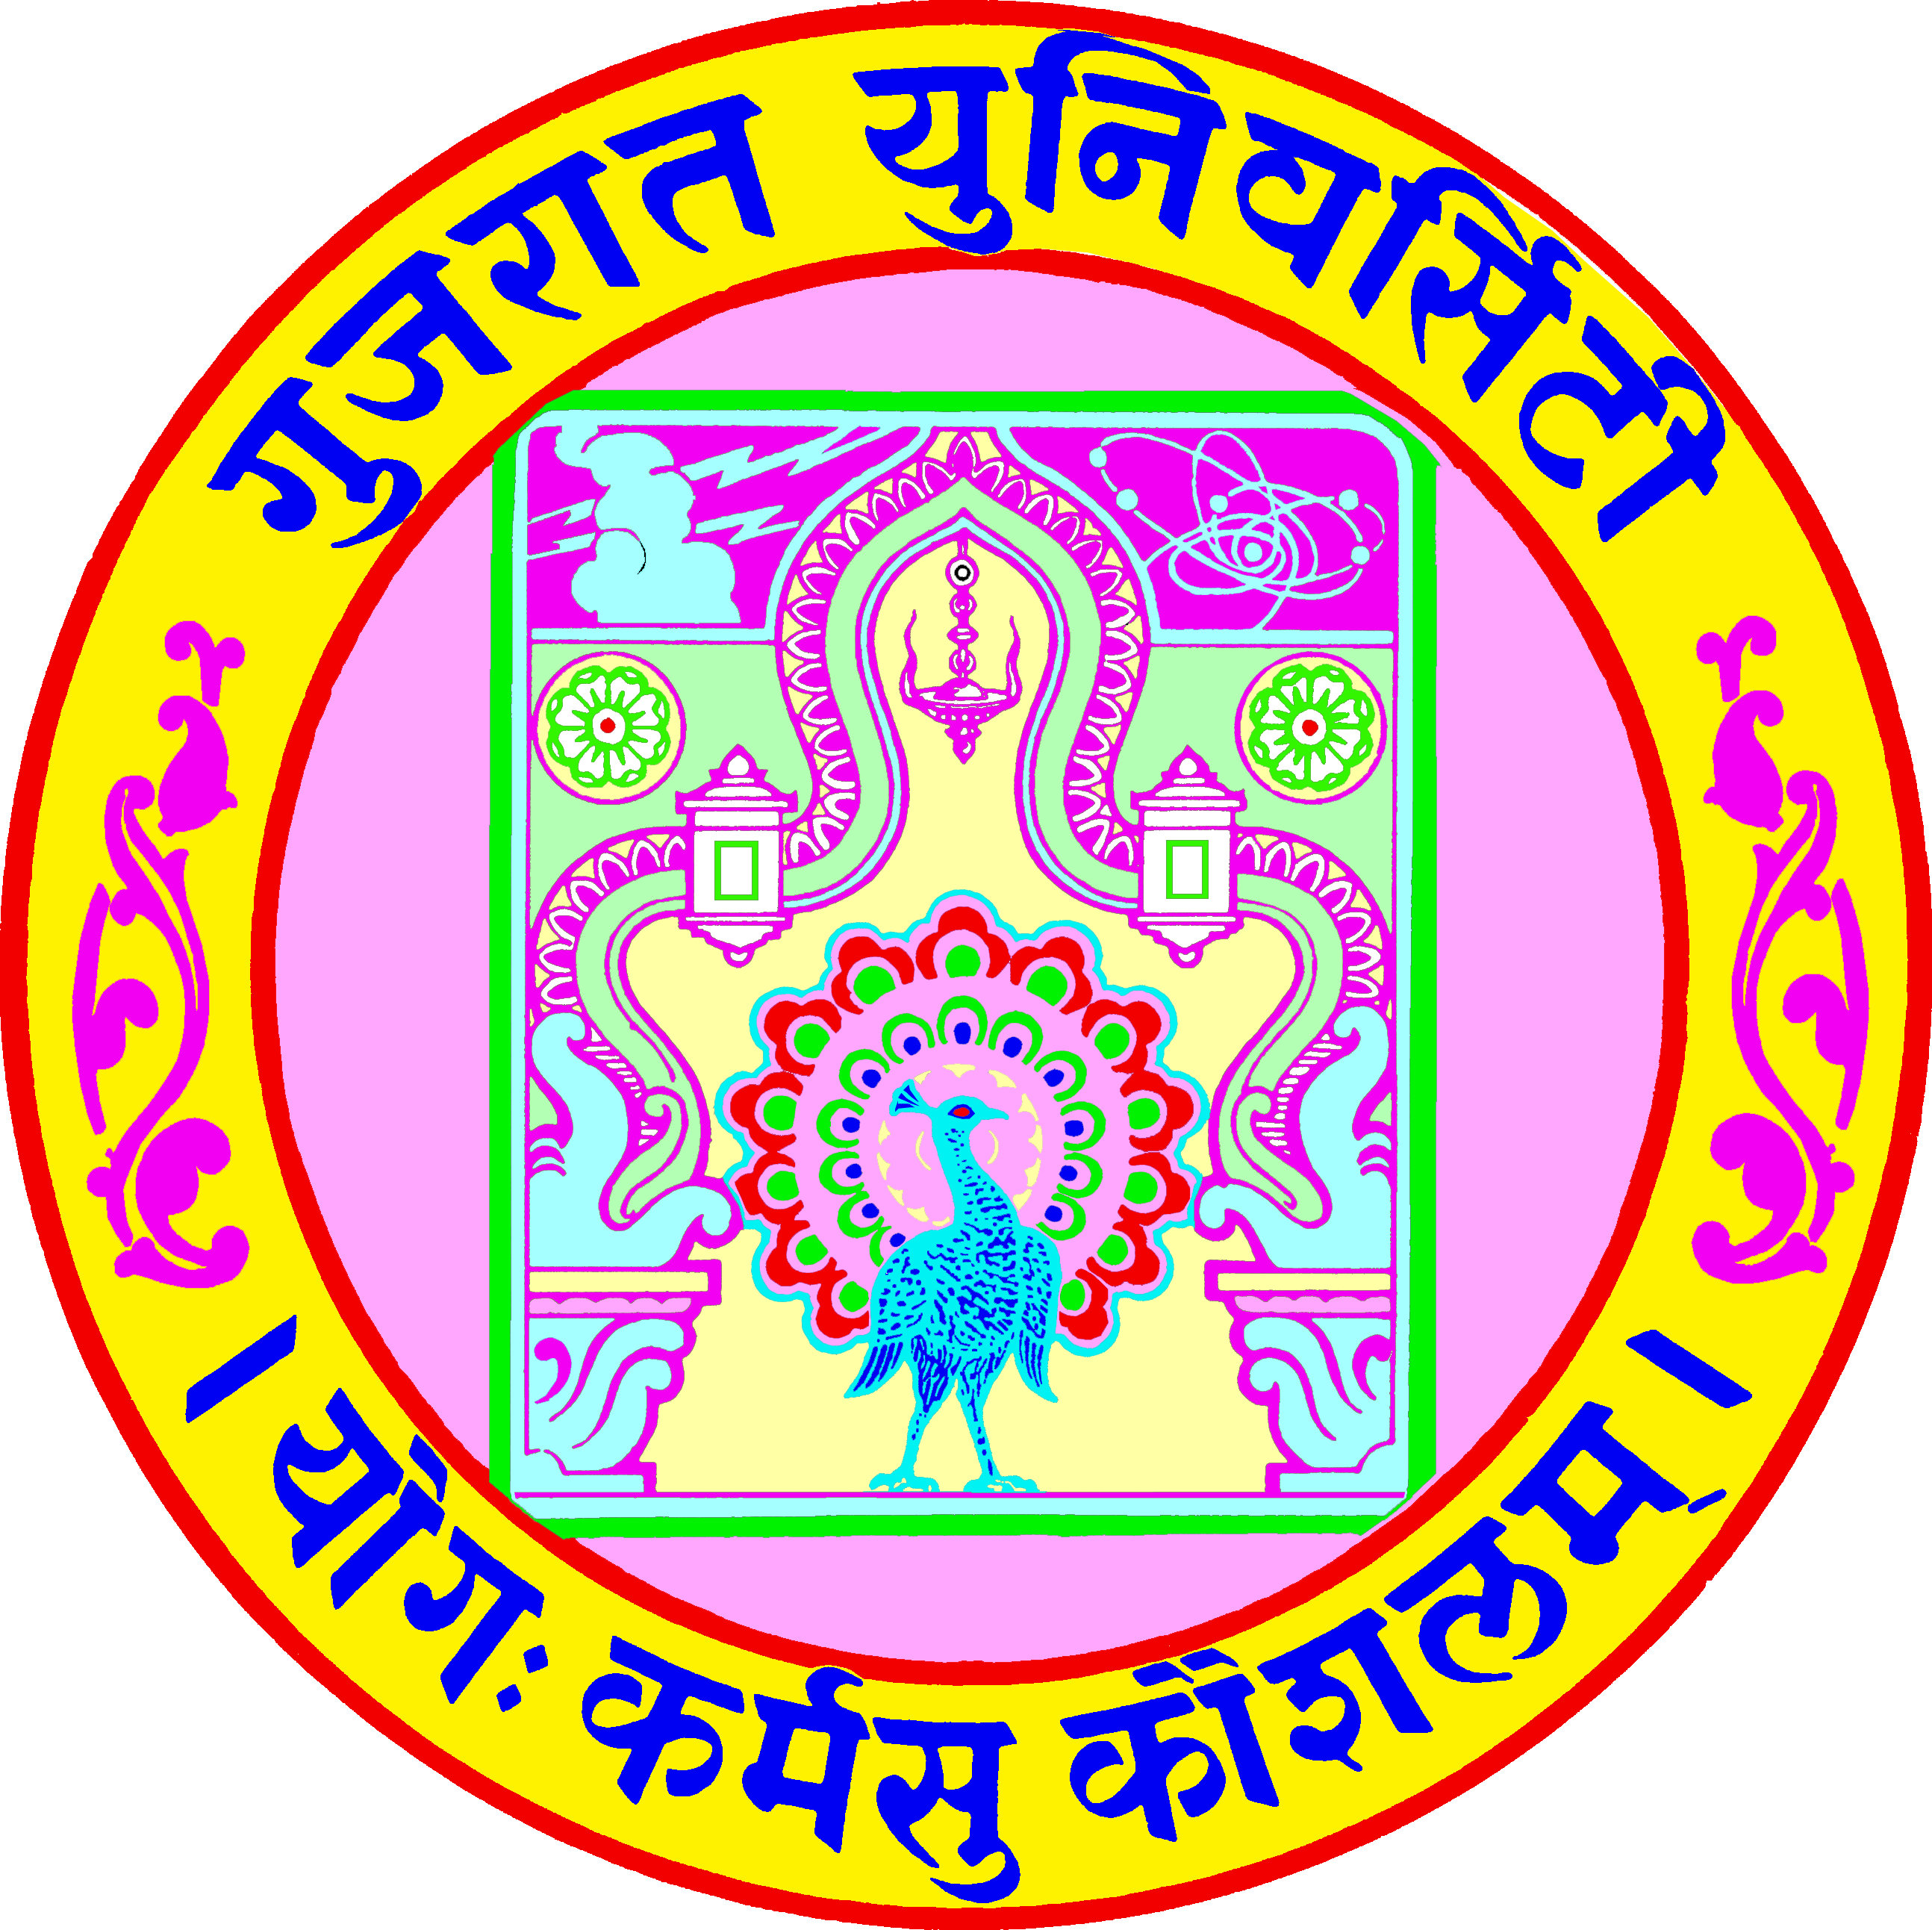 Veer Narmad South Gujarat University logo | University logo, University,  Gujarat